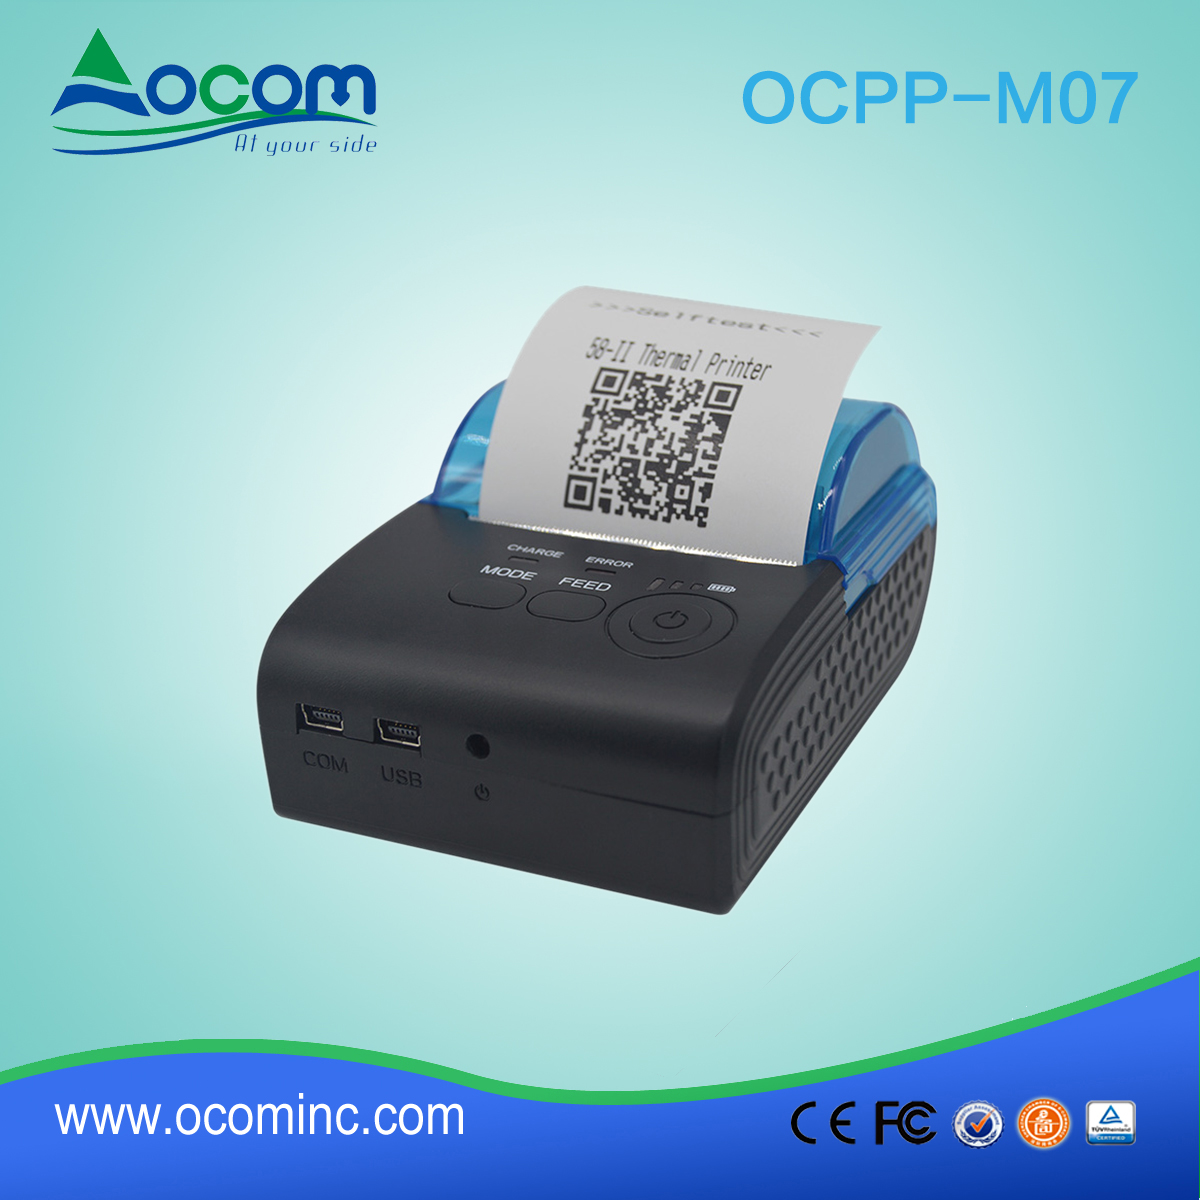 OCPP-M07 58mm Bluetooth Mini Mobile imprimante thermique pour IOS \/ Android